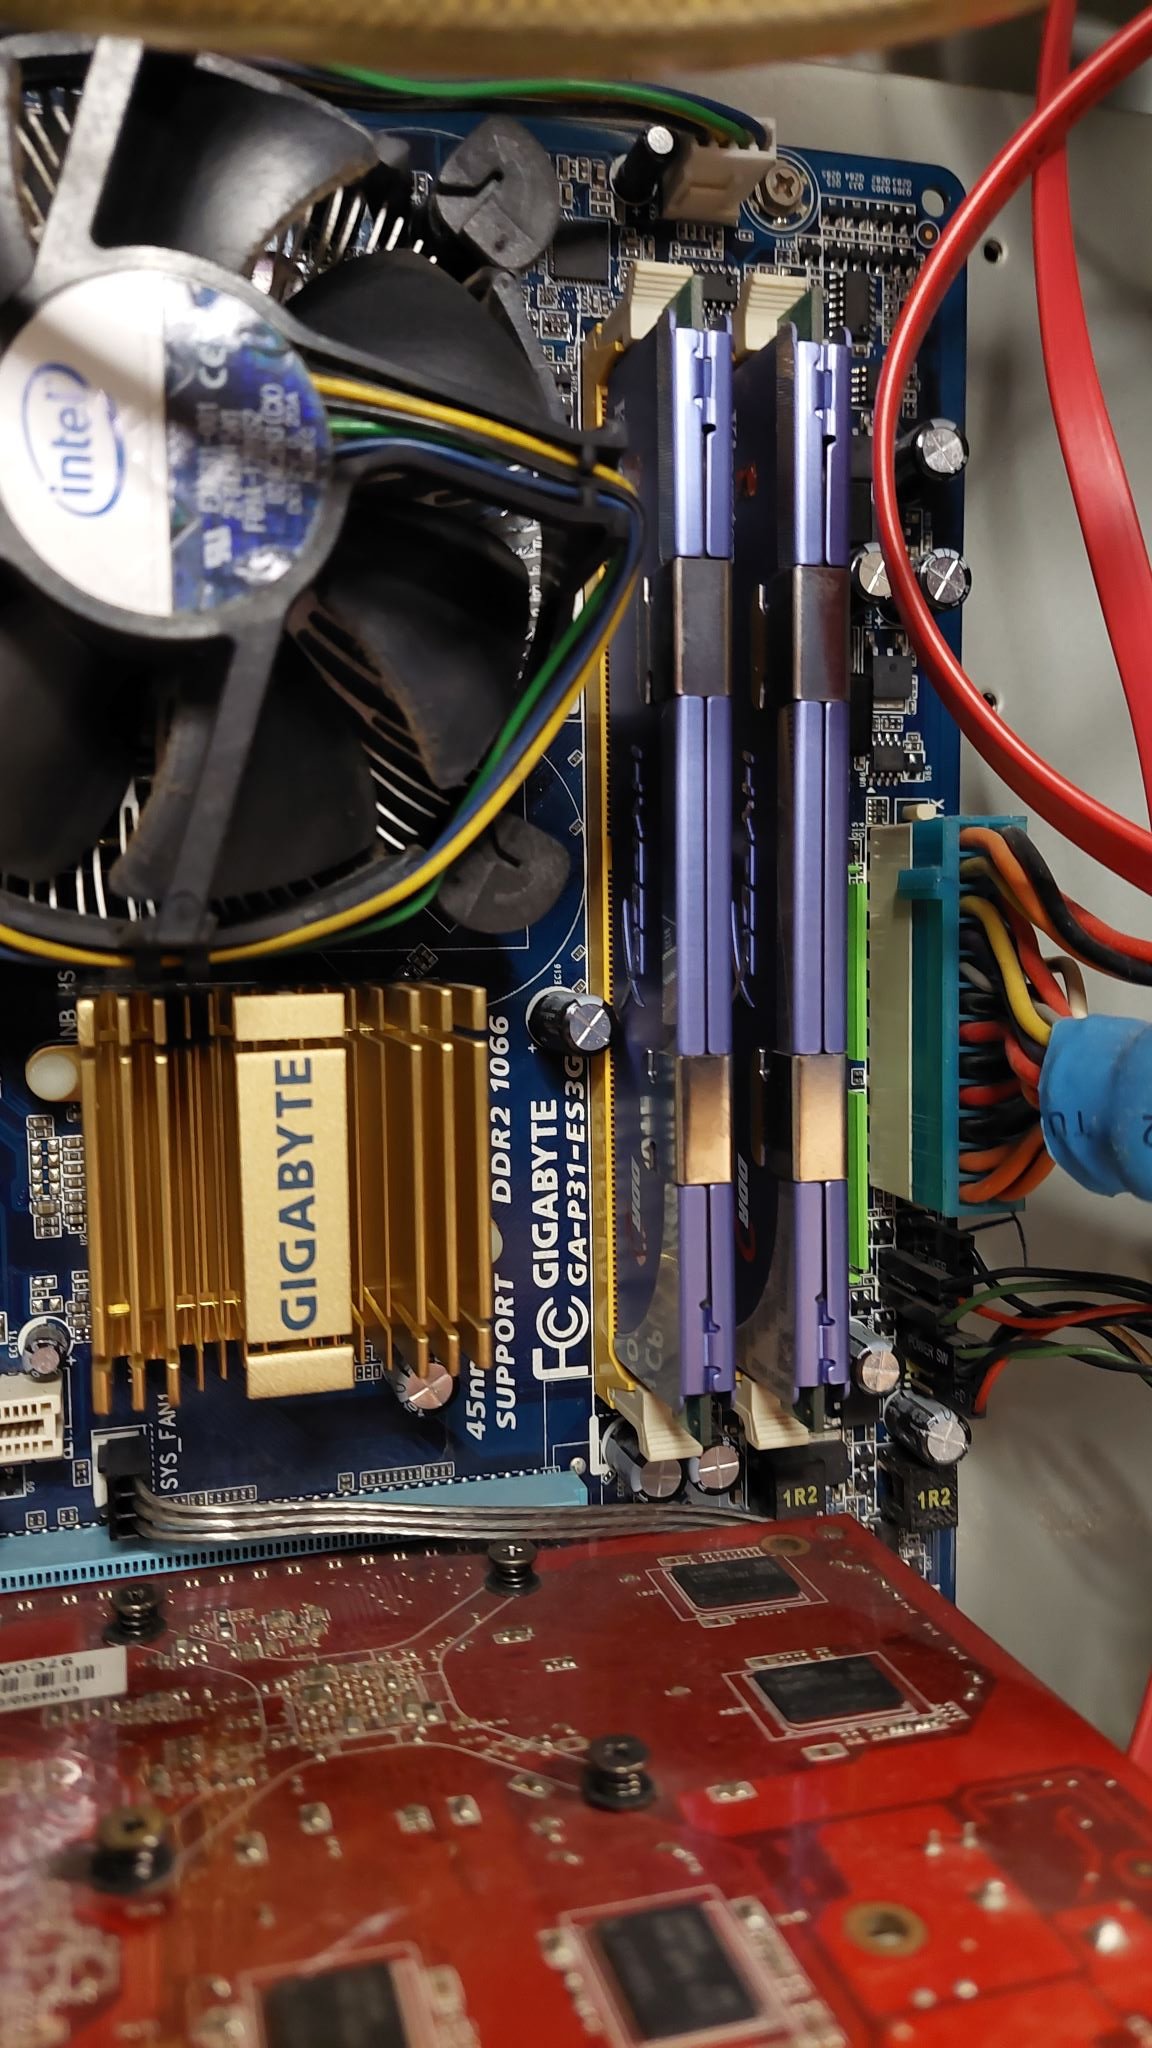 More information about "Desktop PC - Intel E6300"